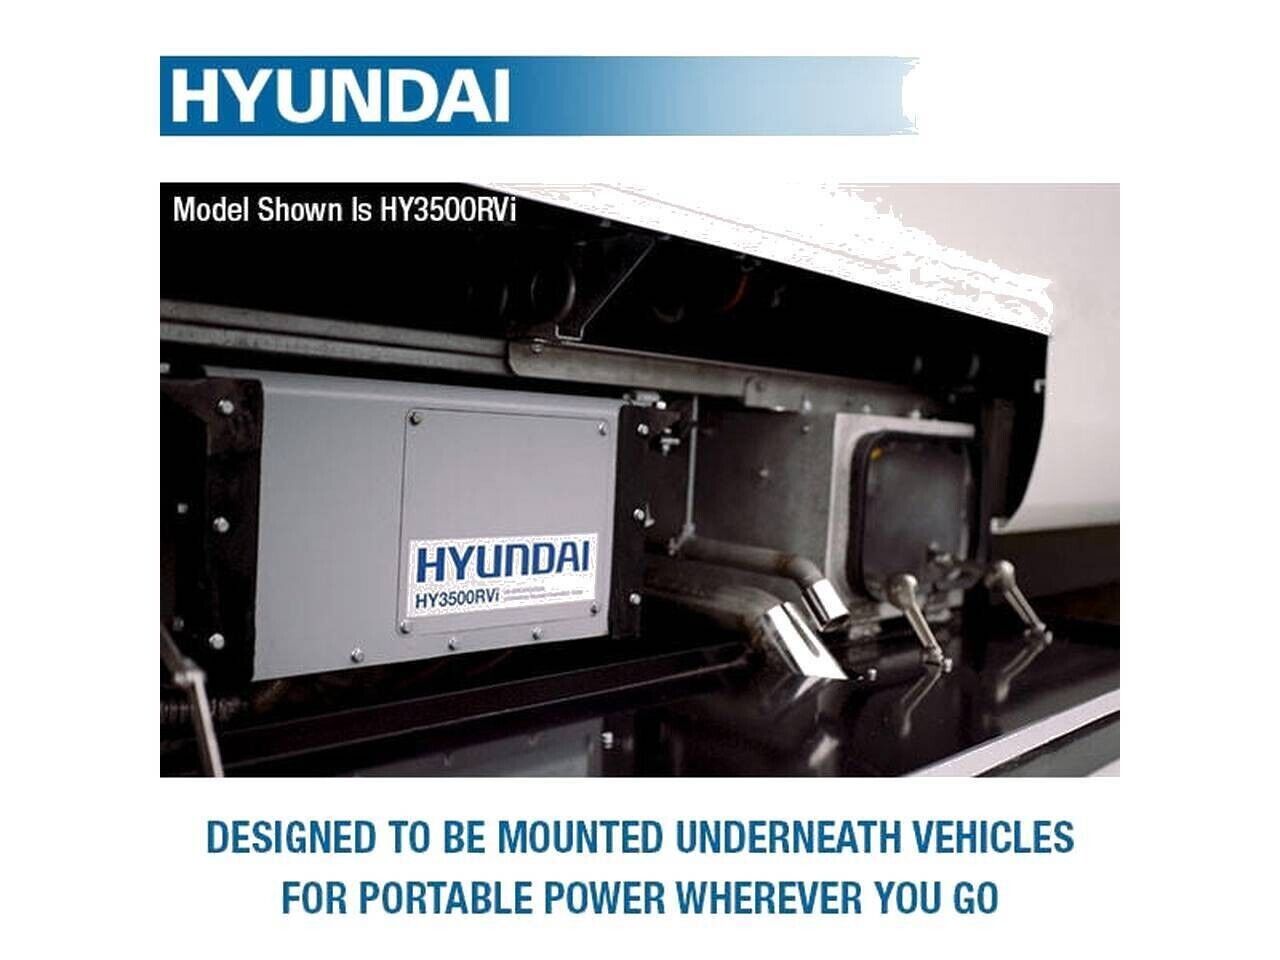 Hyundai HY3500RVi 3.5kW Underslung Vehicle Mounted RVi Generator Motorhome